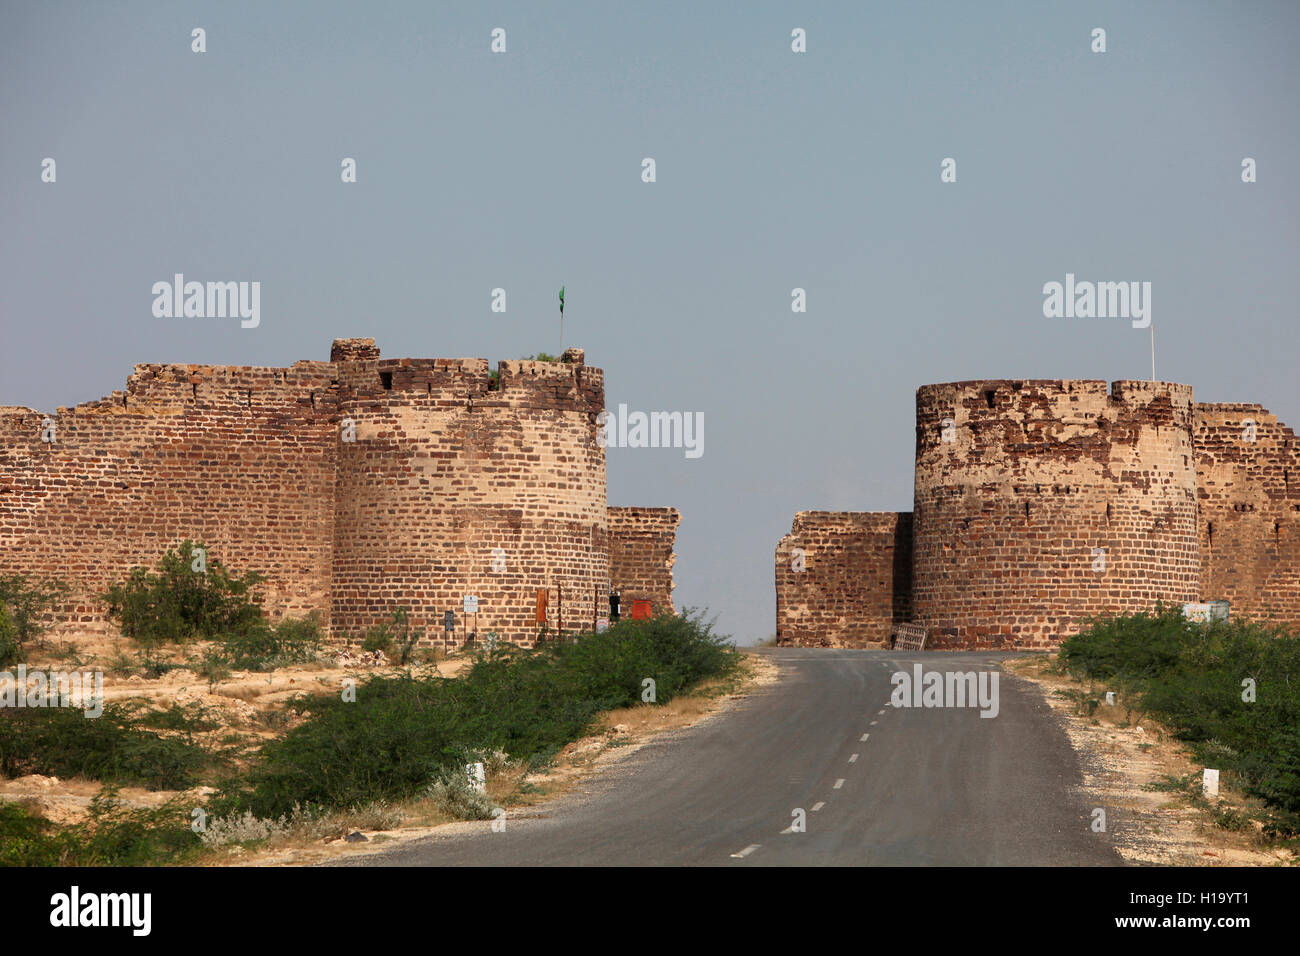 Entrada de fort lakhpat, Gujarat (India). lakhpat era conocido como basta bander. Foto de stock